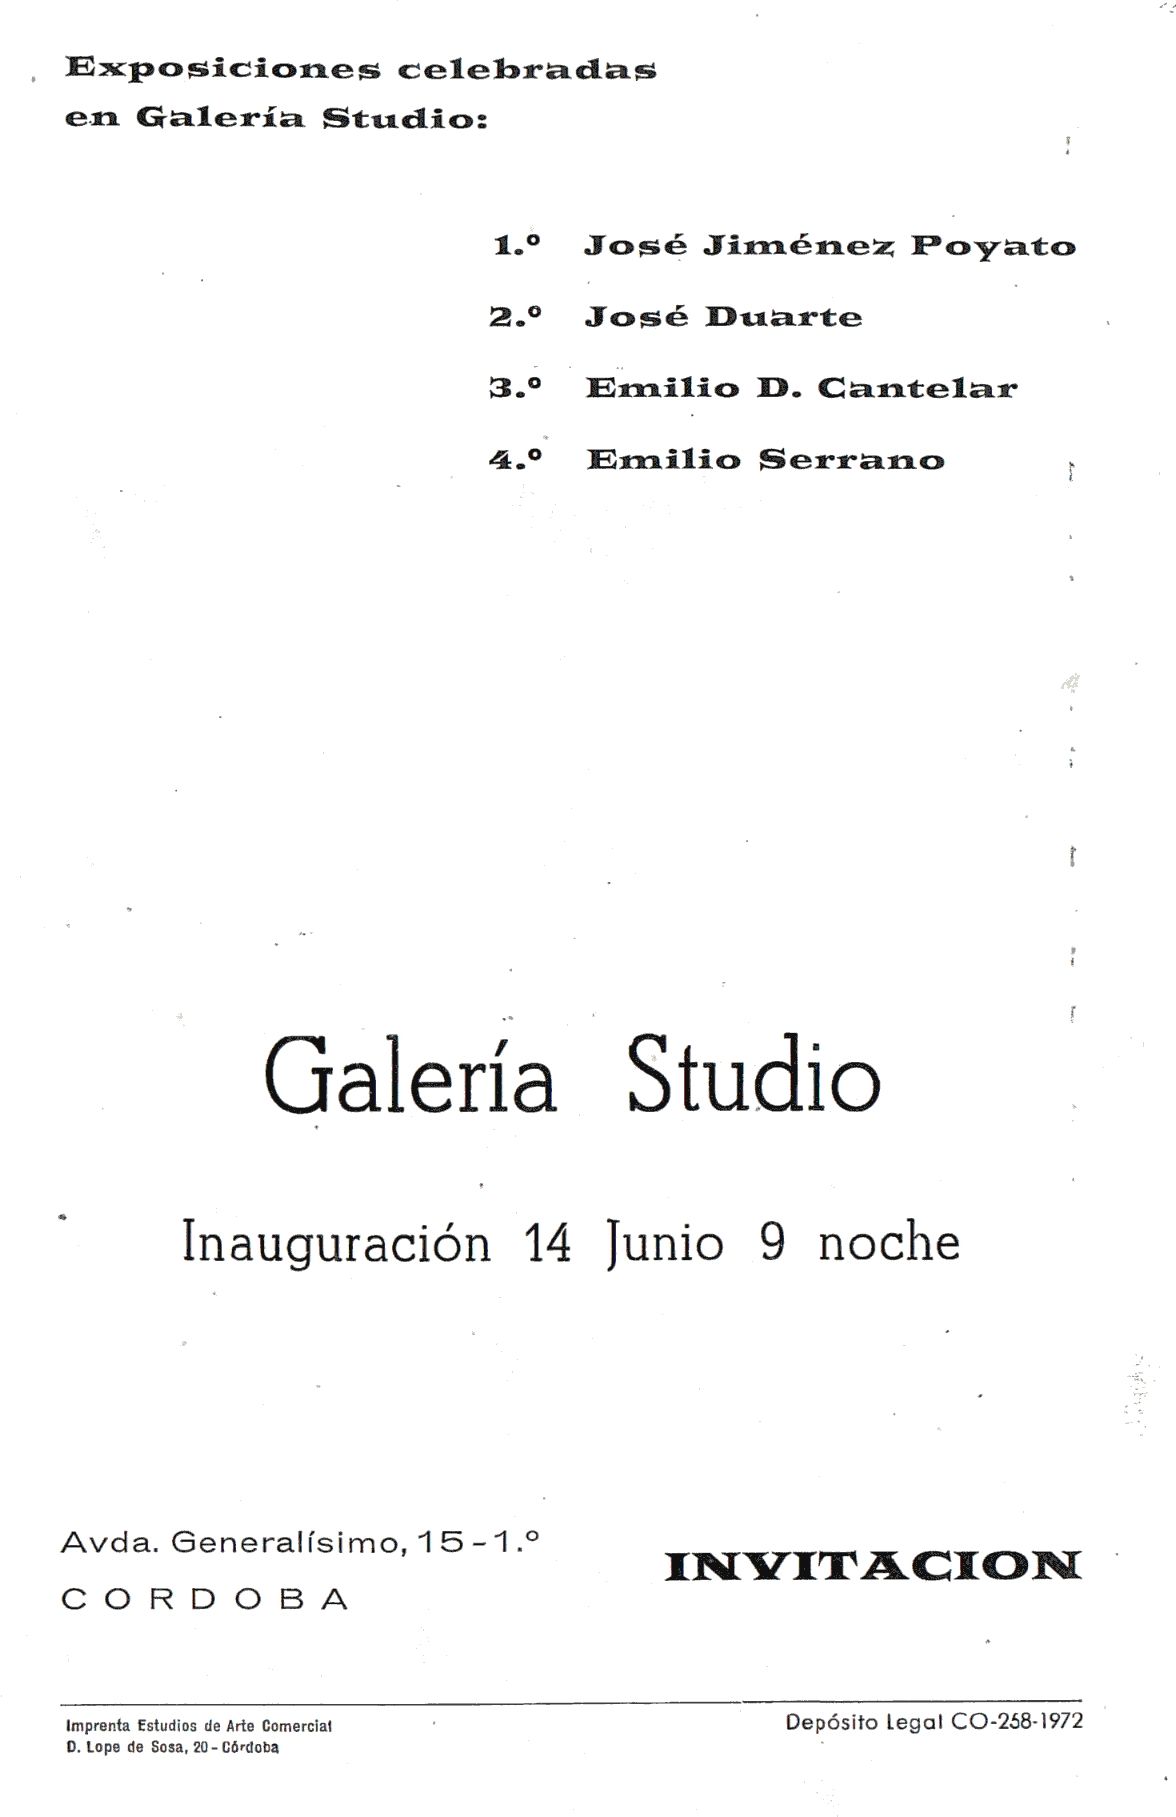 Gal. Studio 8